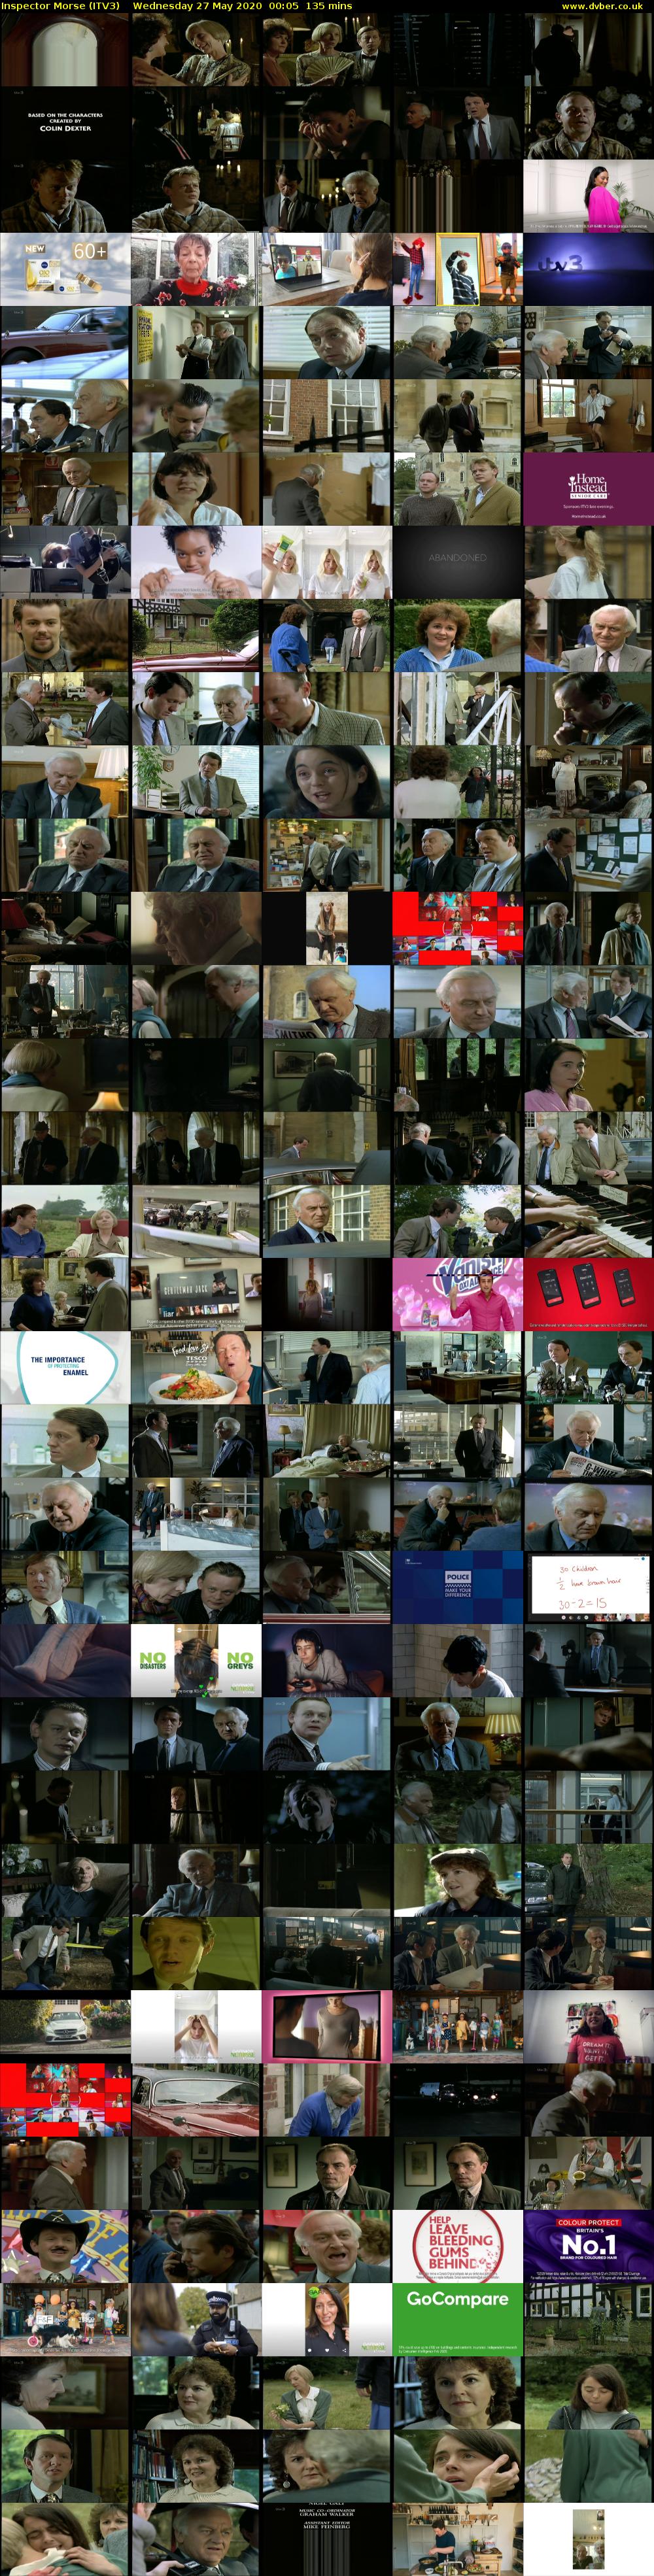 Inspector Morse (ITV3) Wednesday 27 May 2020 00:05 - 02:20